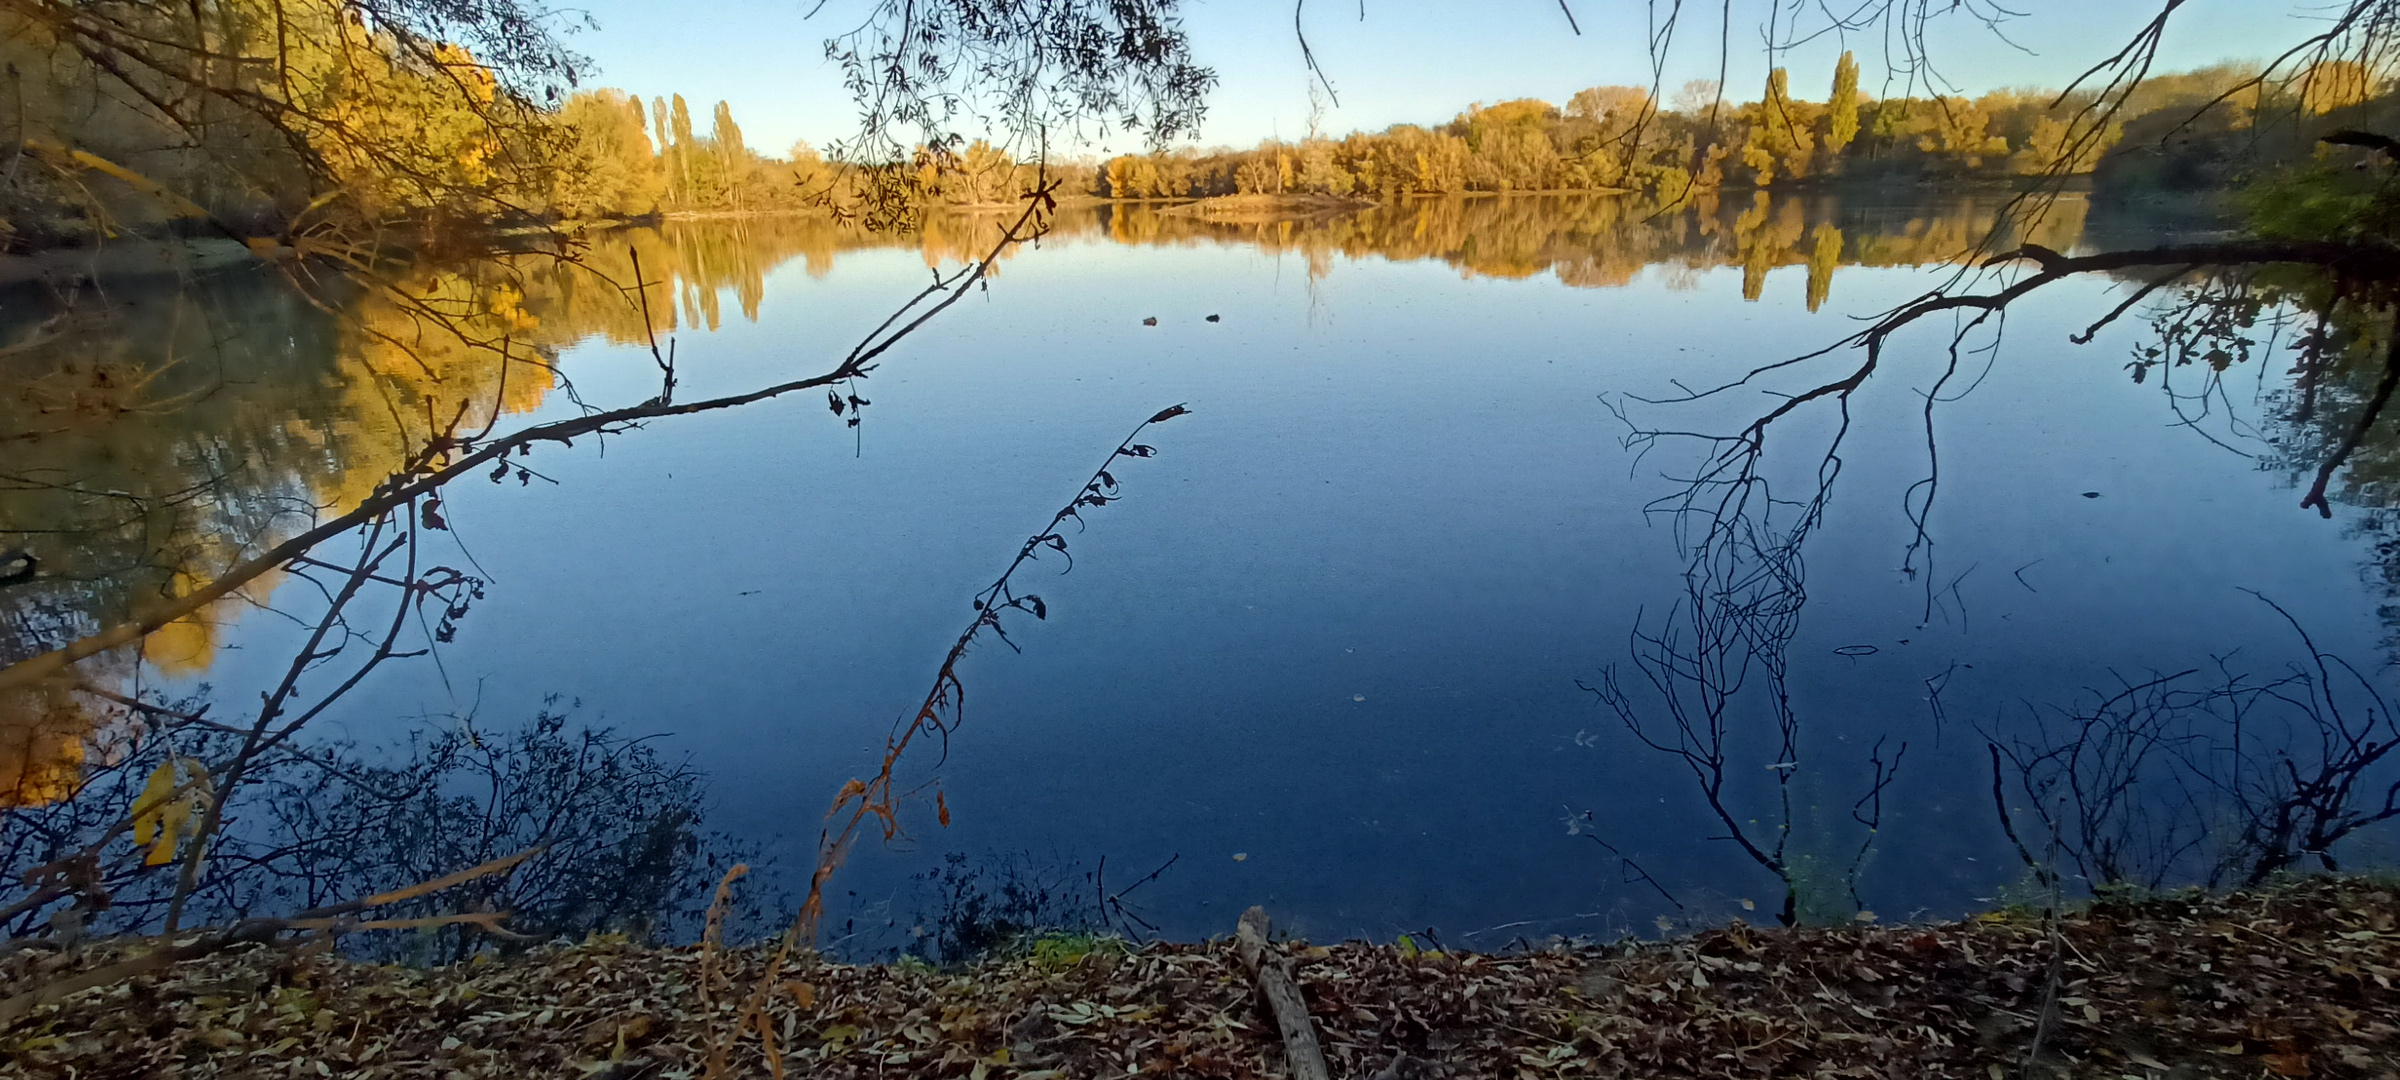 Sieglarer See im Herbst - 2022